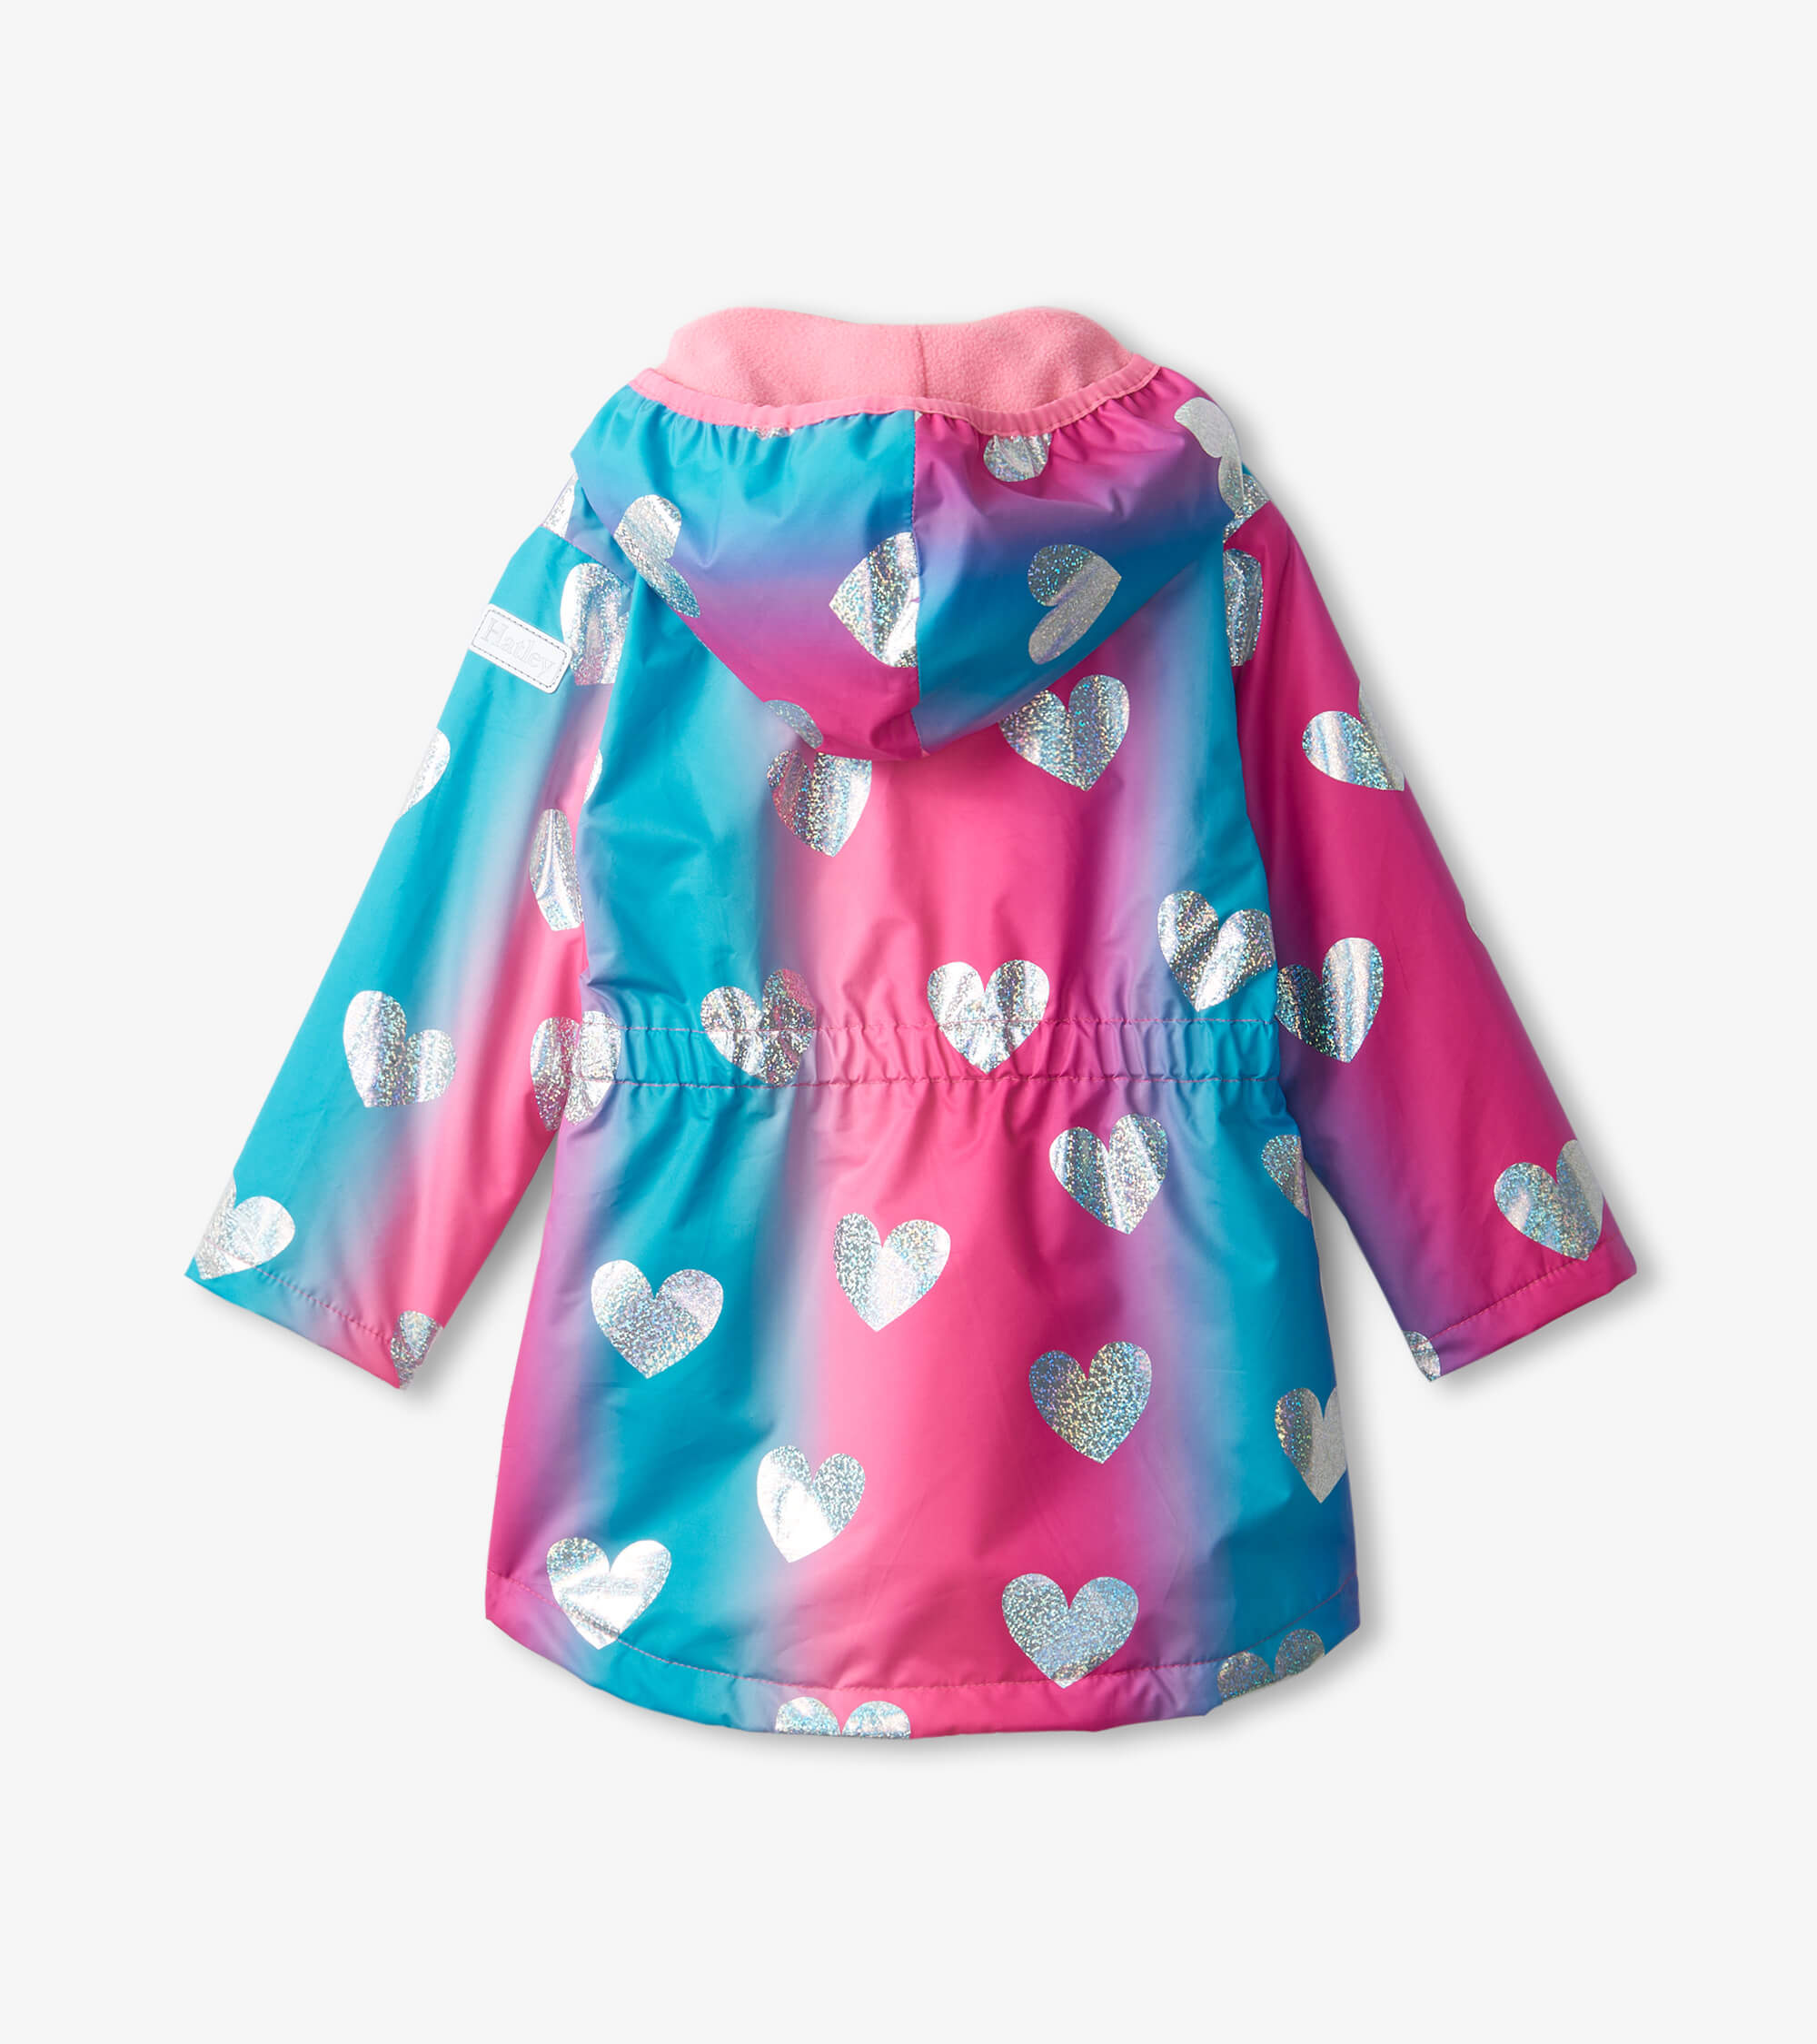 Fun Hearts Girls Microfibre Rain Jacket